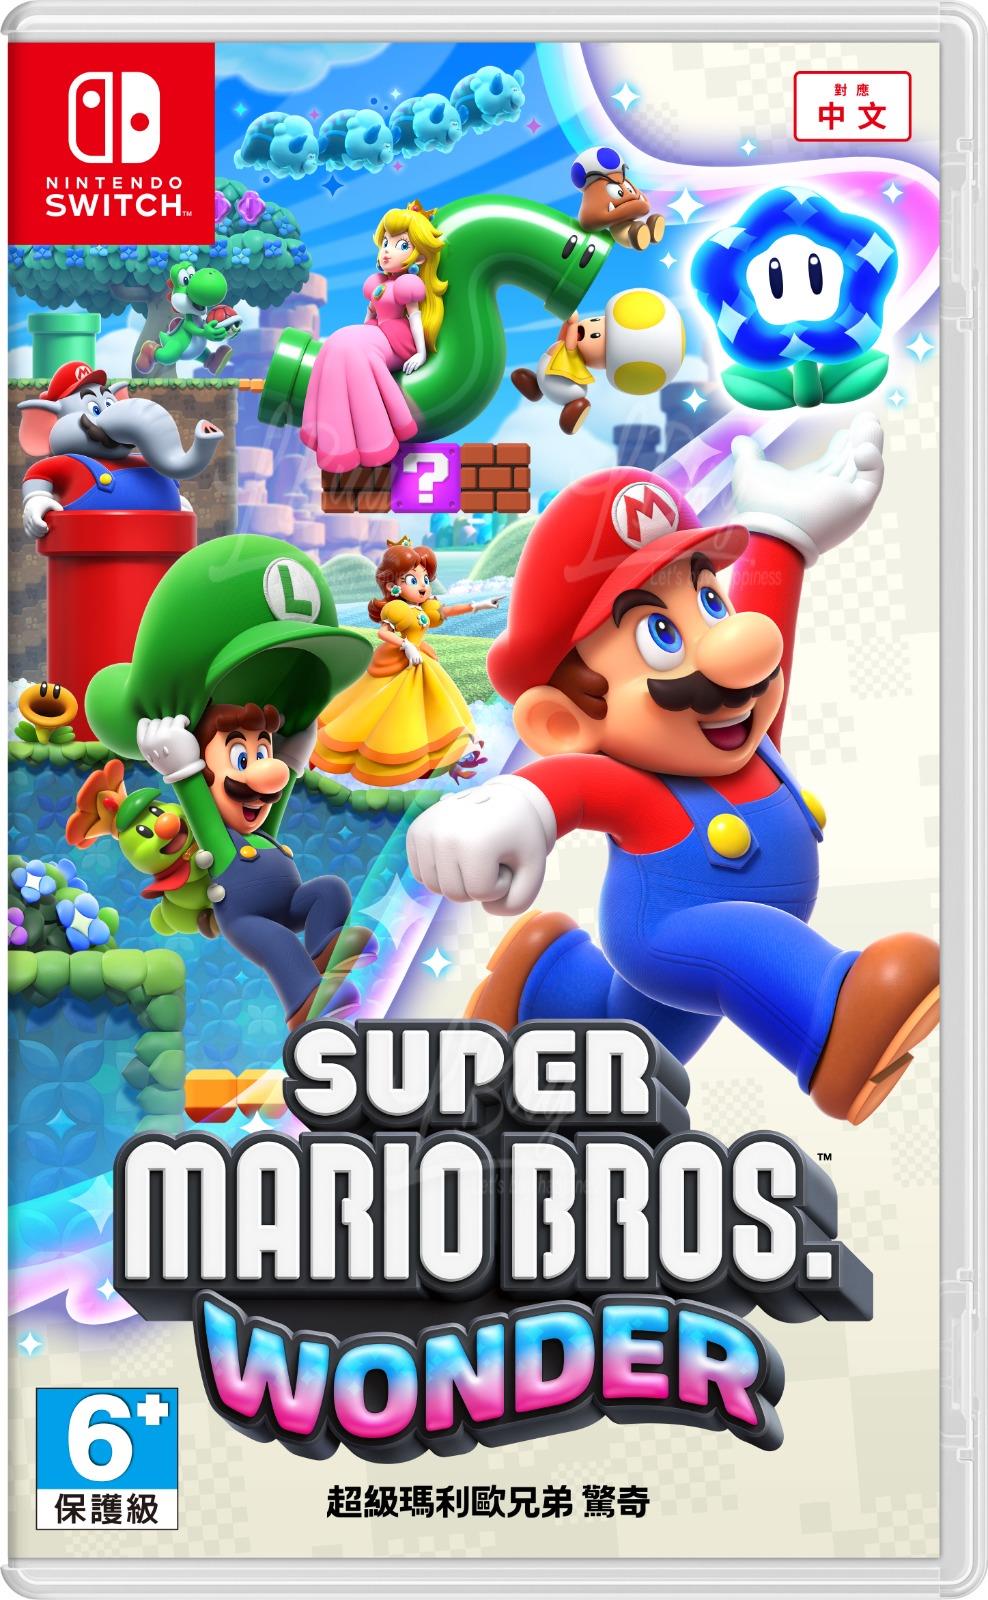 Nintendo Switch 超級瑪利歐兄弟 驚奇